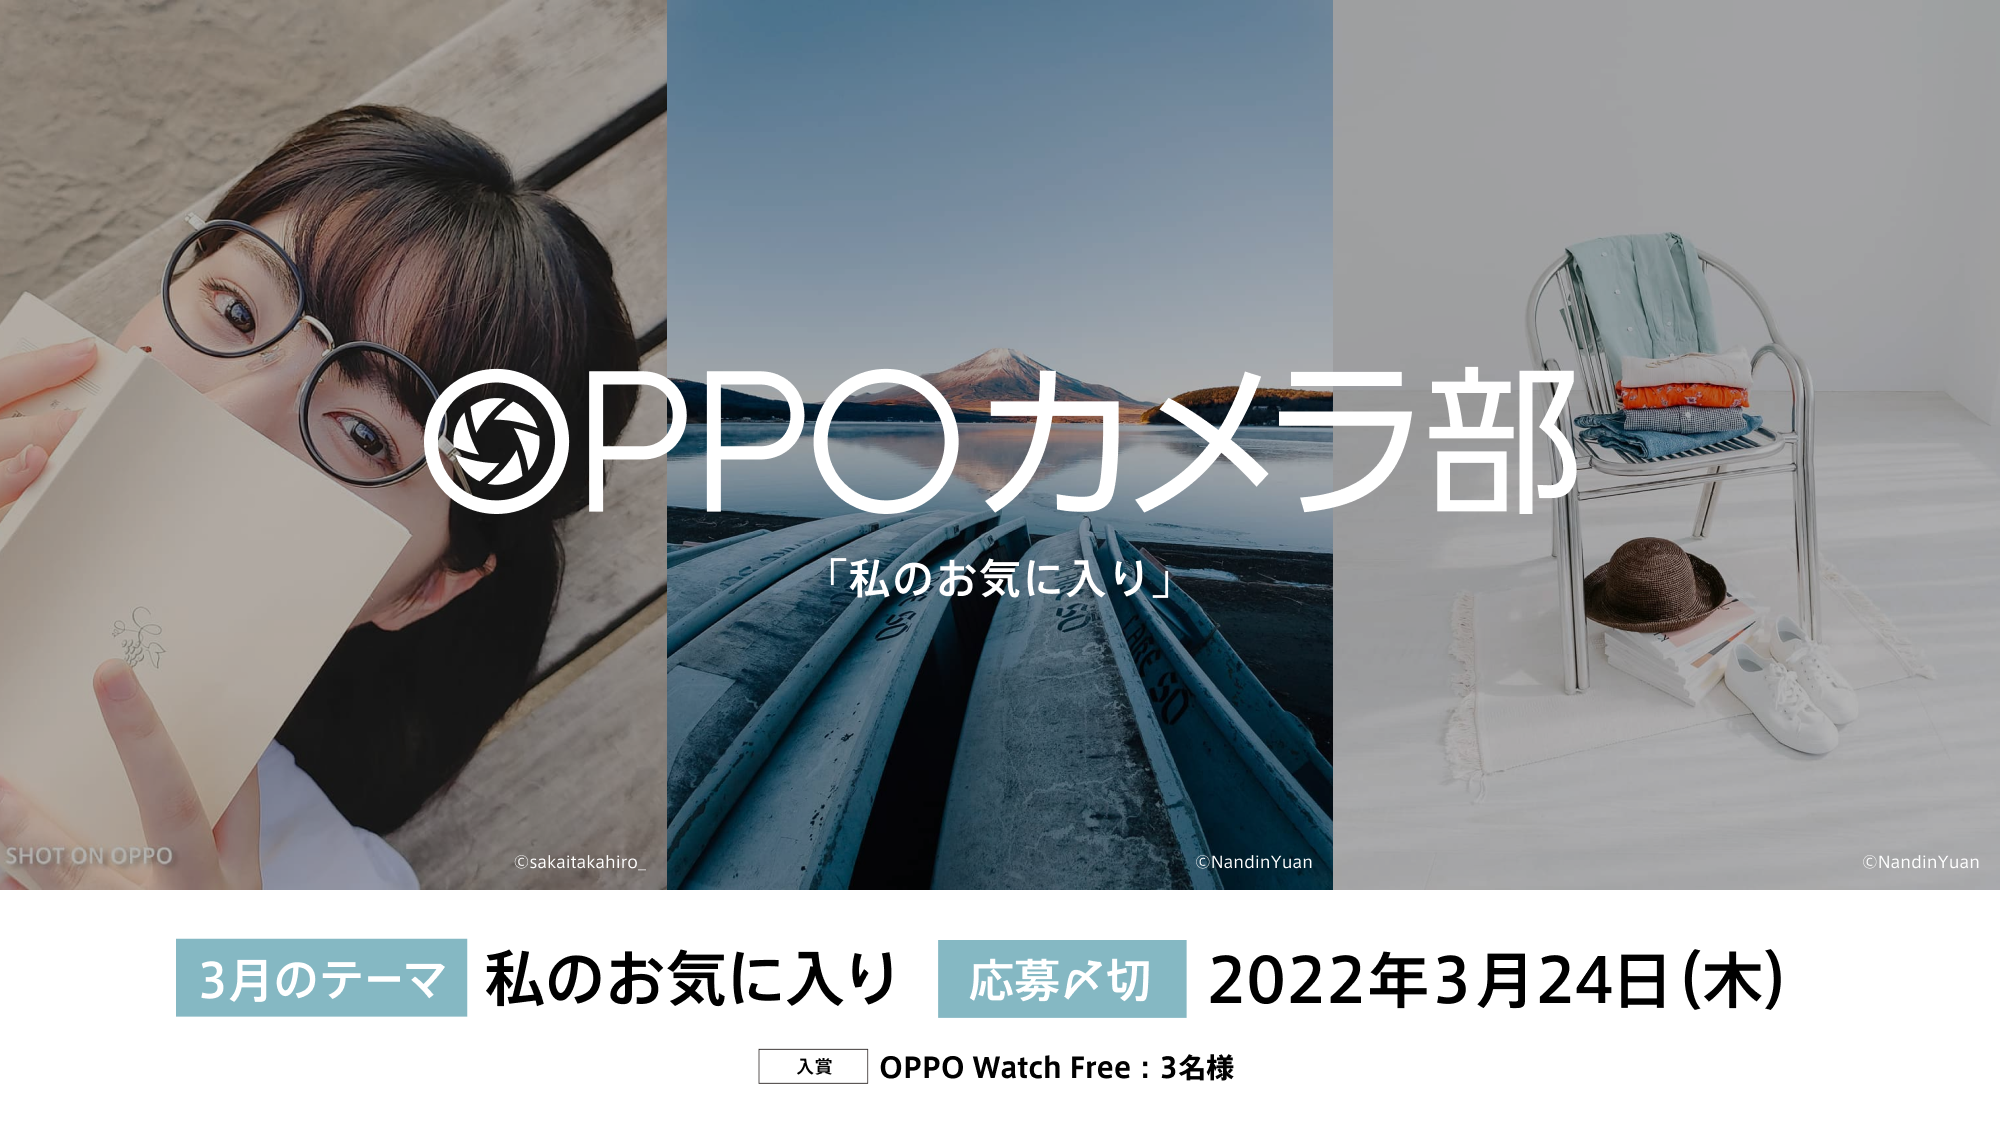 『OPPO Japan』コミュニティ運営